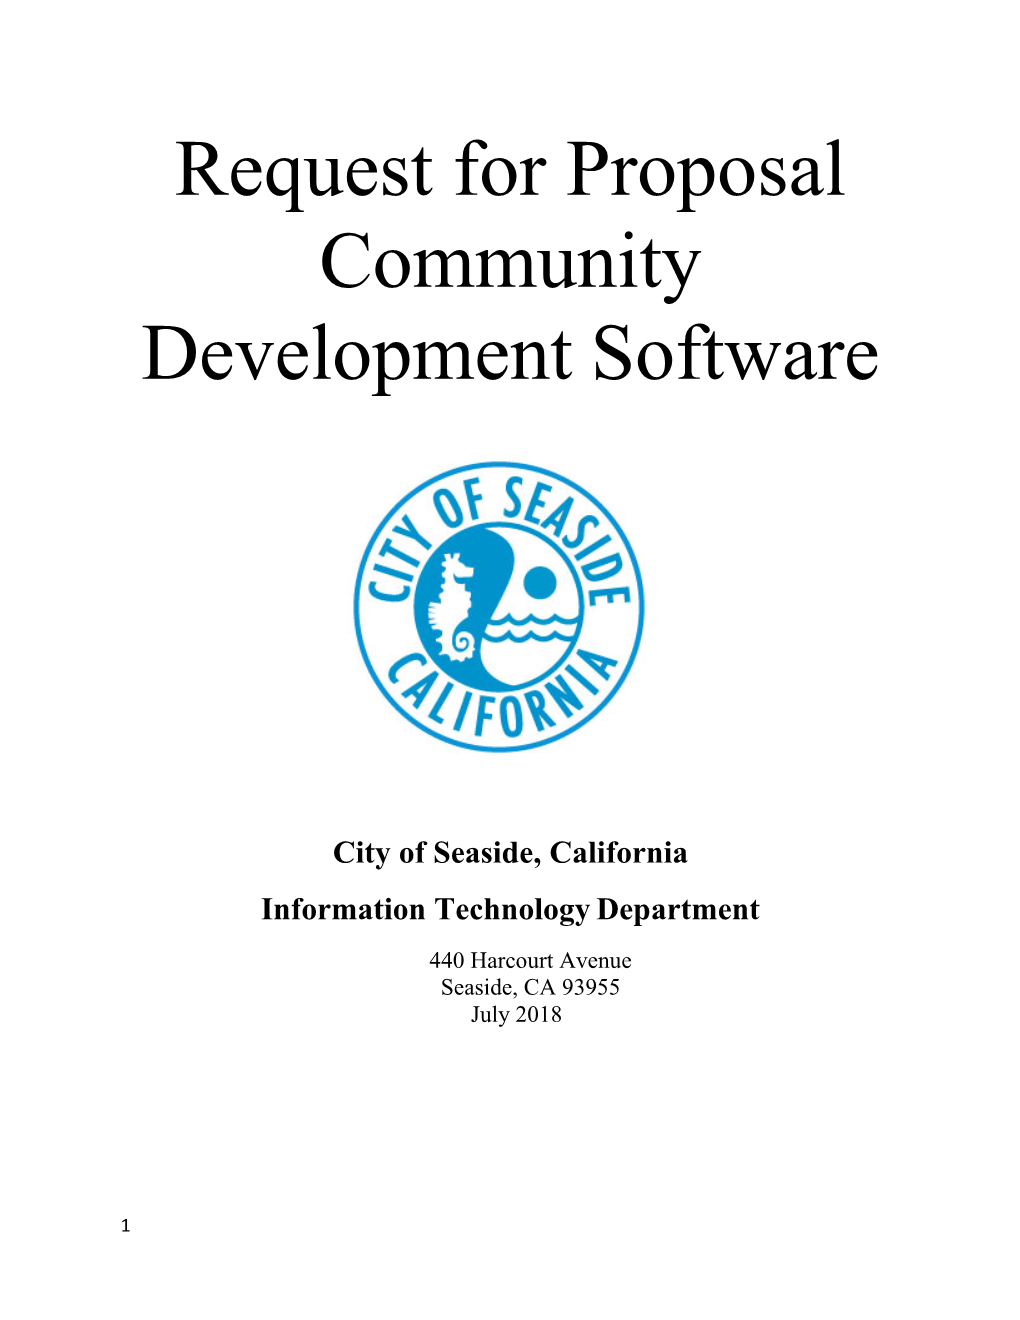 Request for Proposal Community Development Software